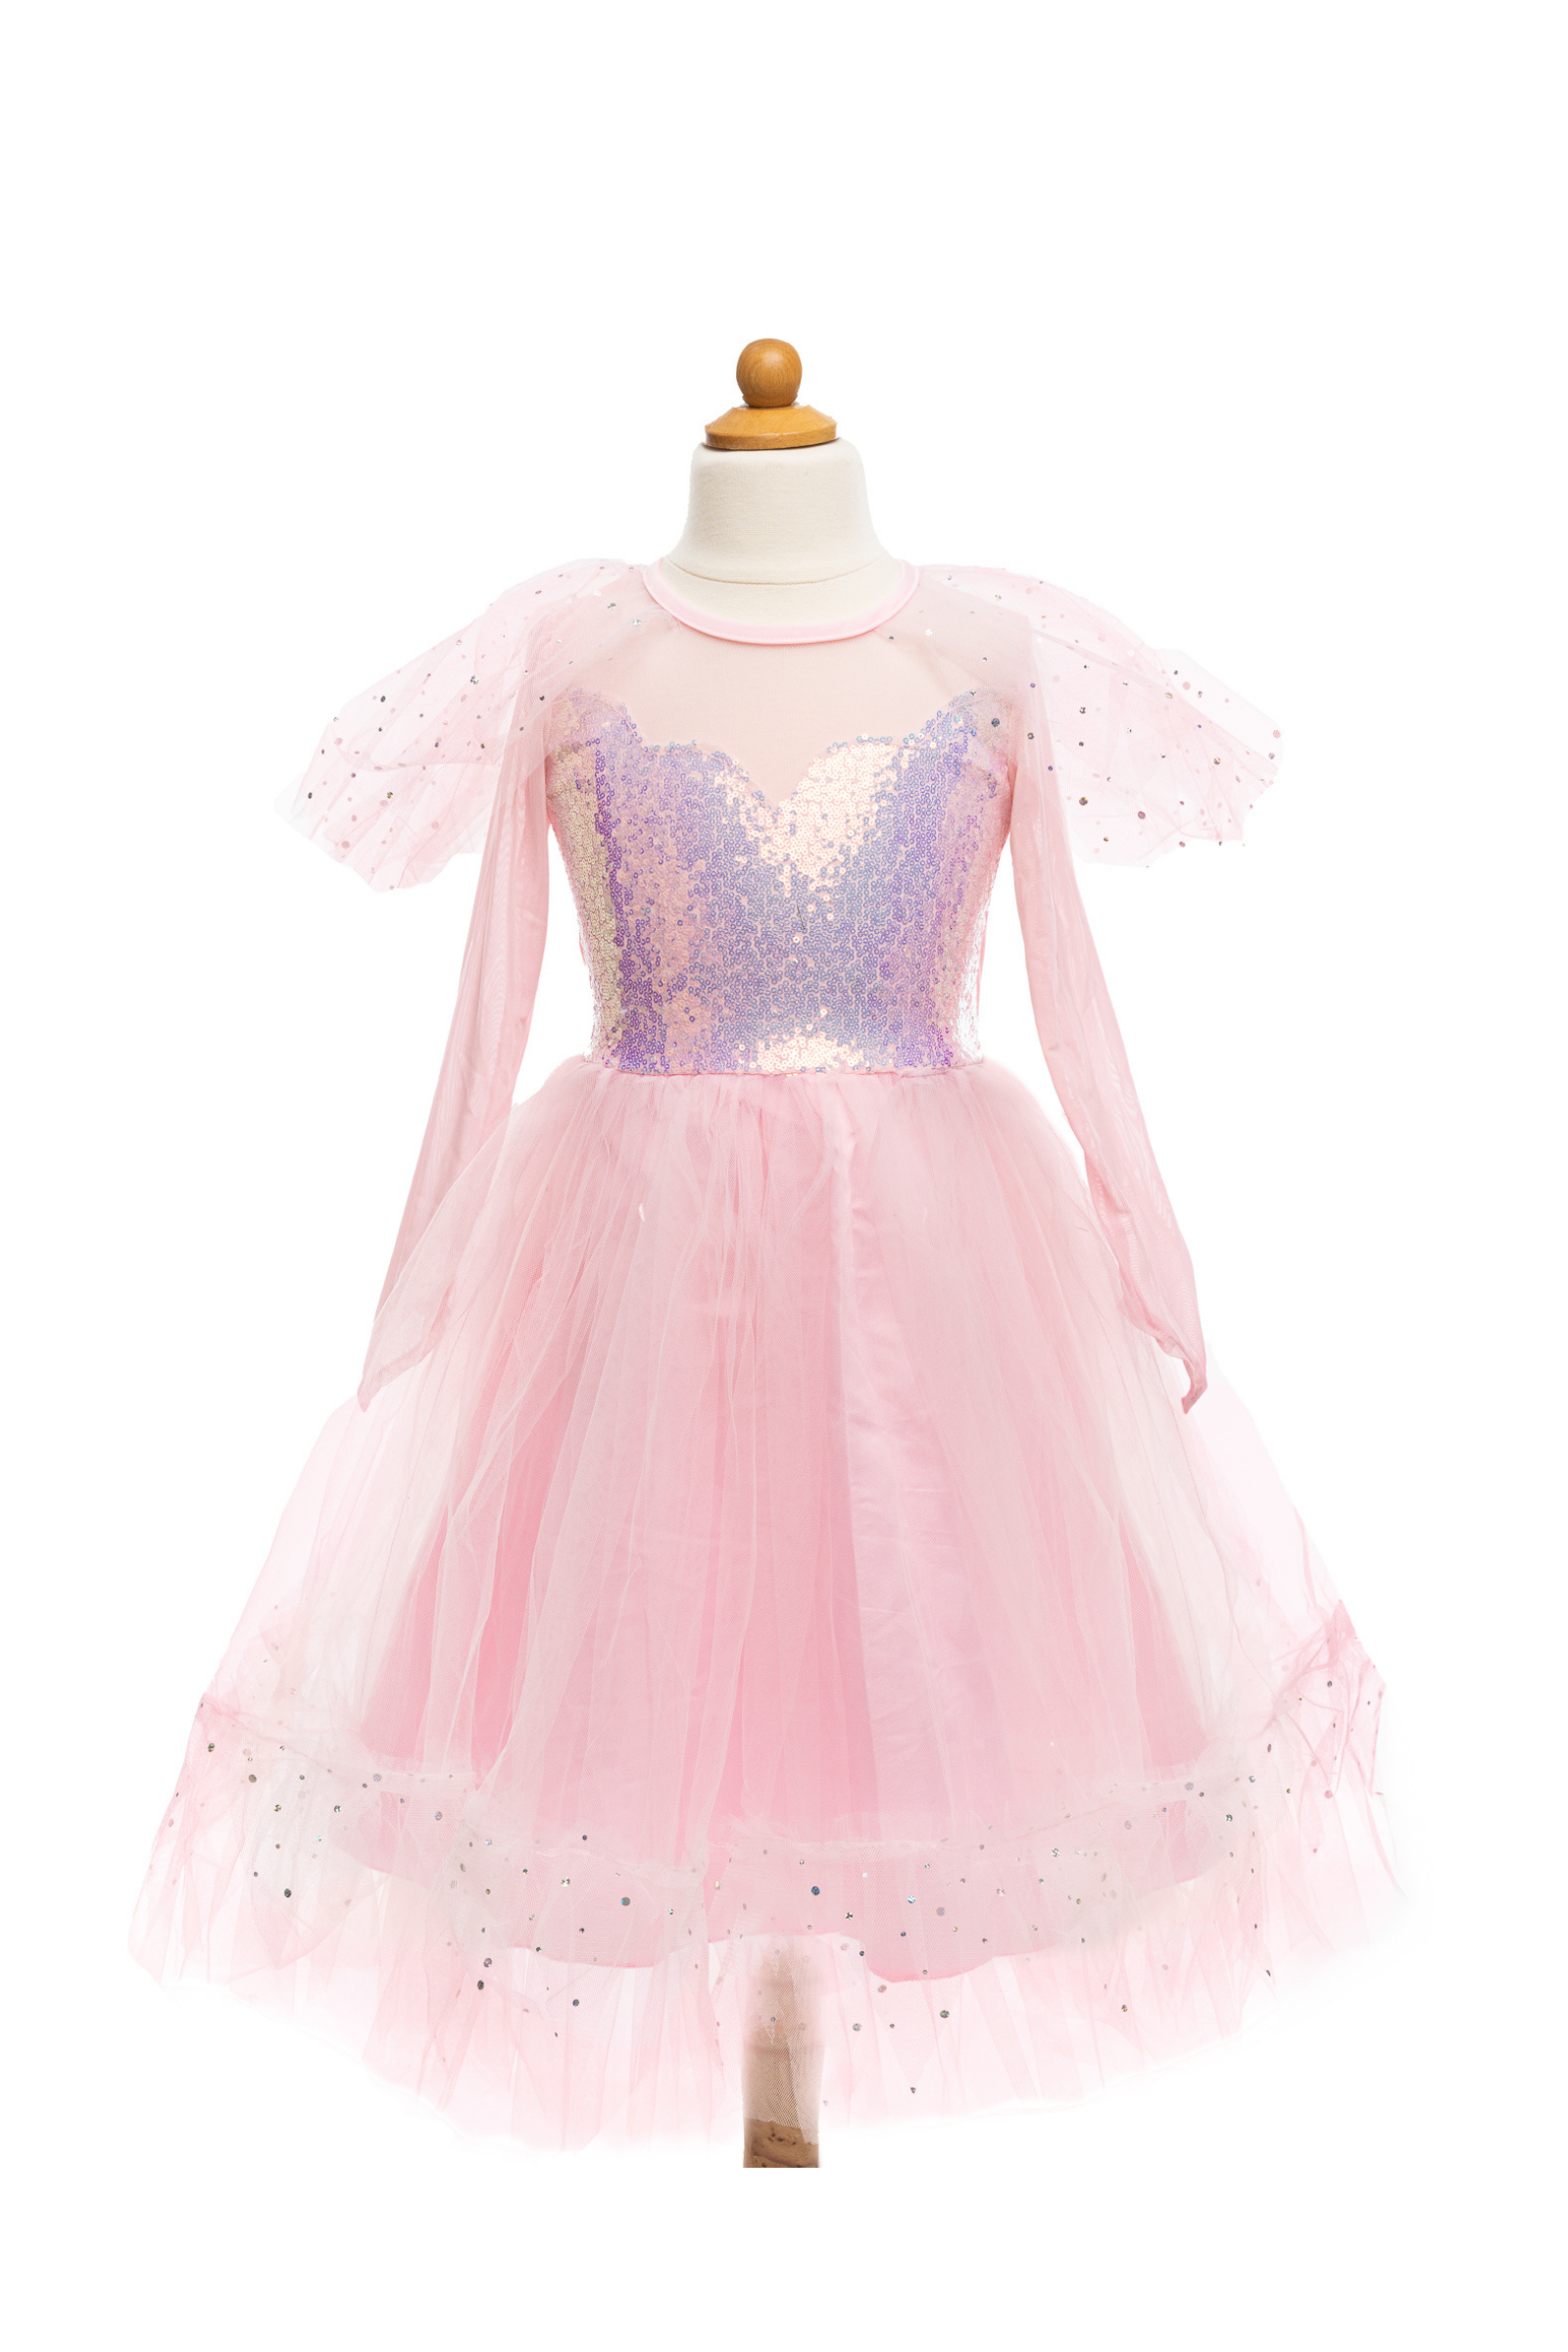 Great Pretenders Precious Pink Sequins Cape Fancy Dress - Daisy Daisy